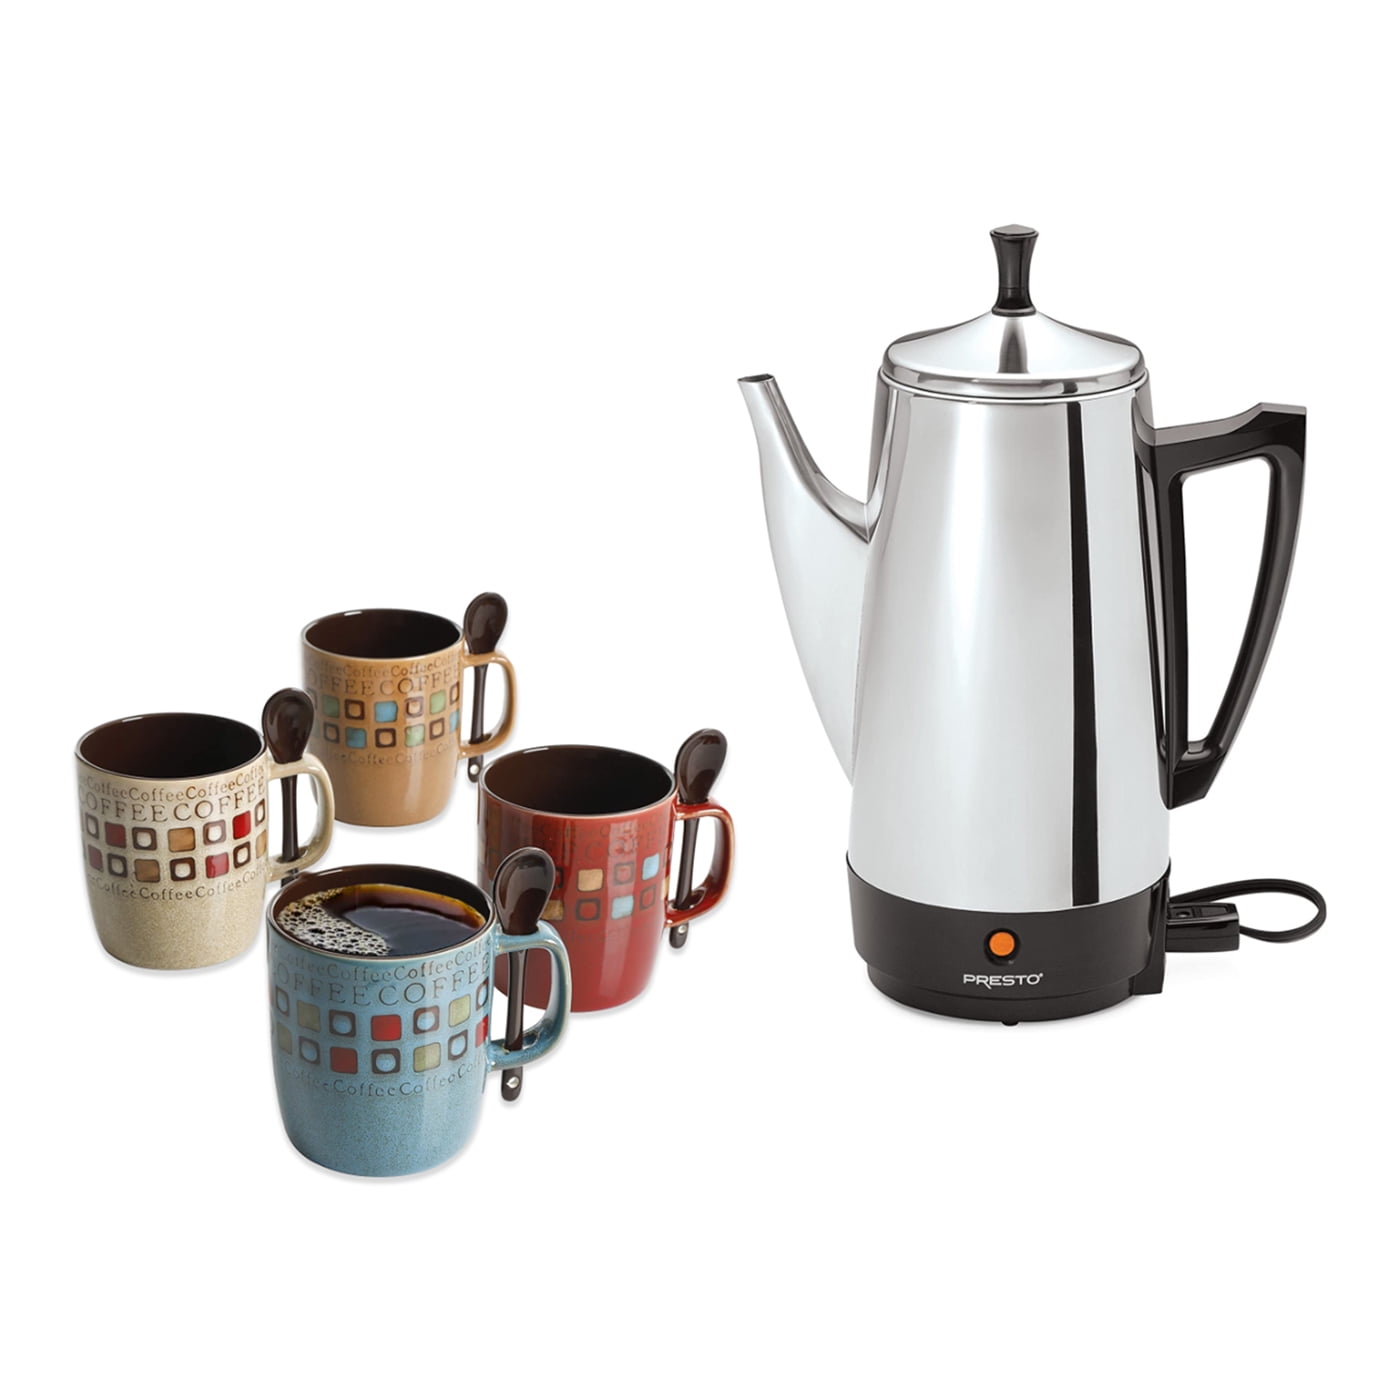 Presto 12-Cup Stainless Steel Coffee Maker (02811) Bundle with 4 Presto 12 Cup Stainless Steel Coffee Maker